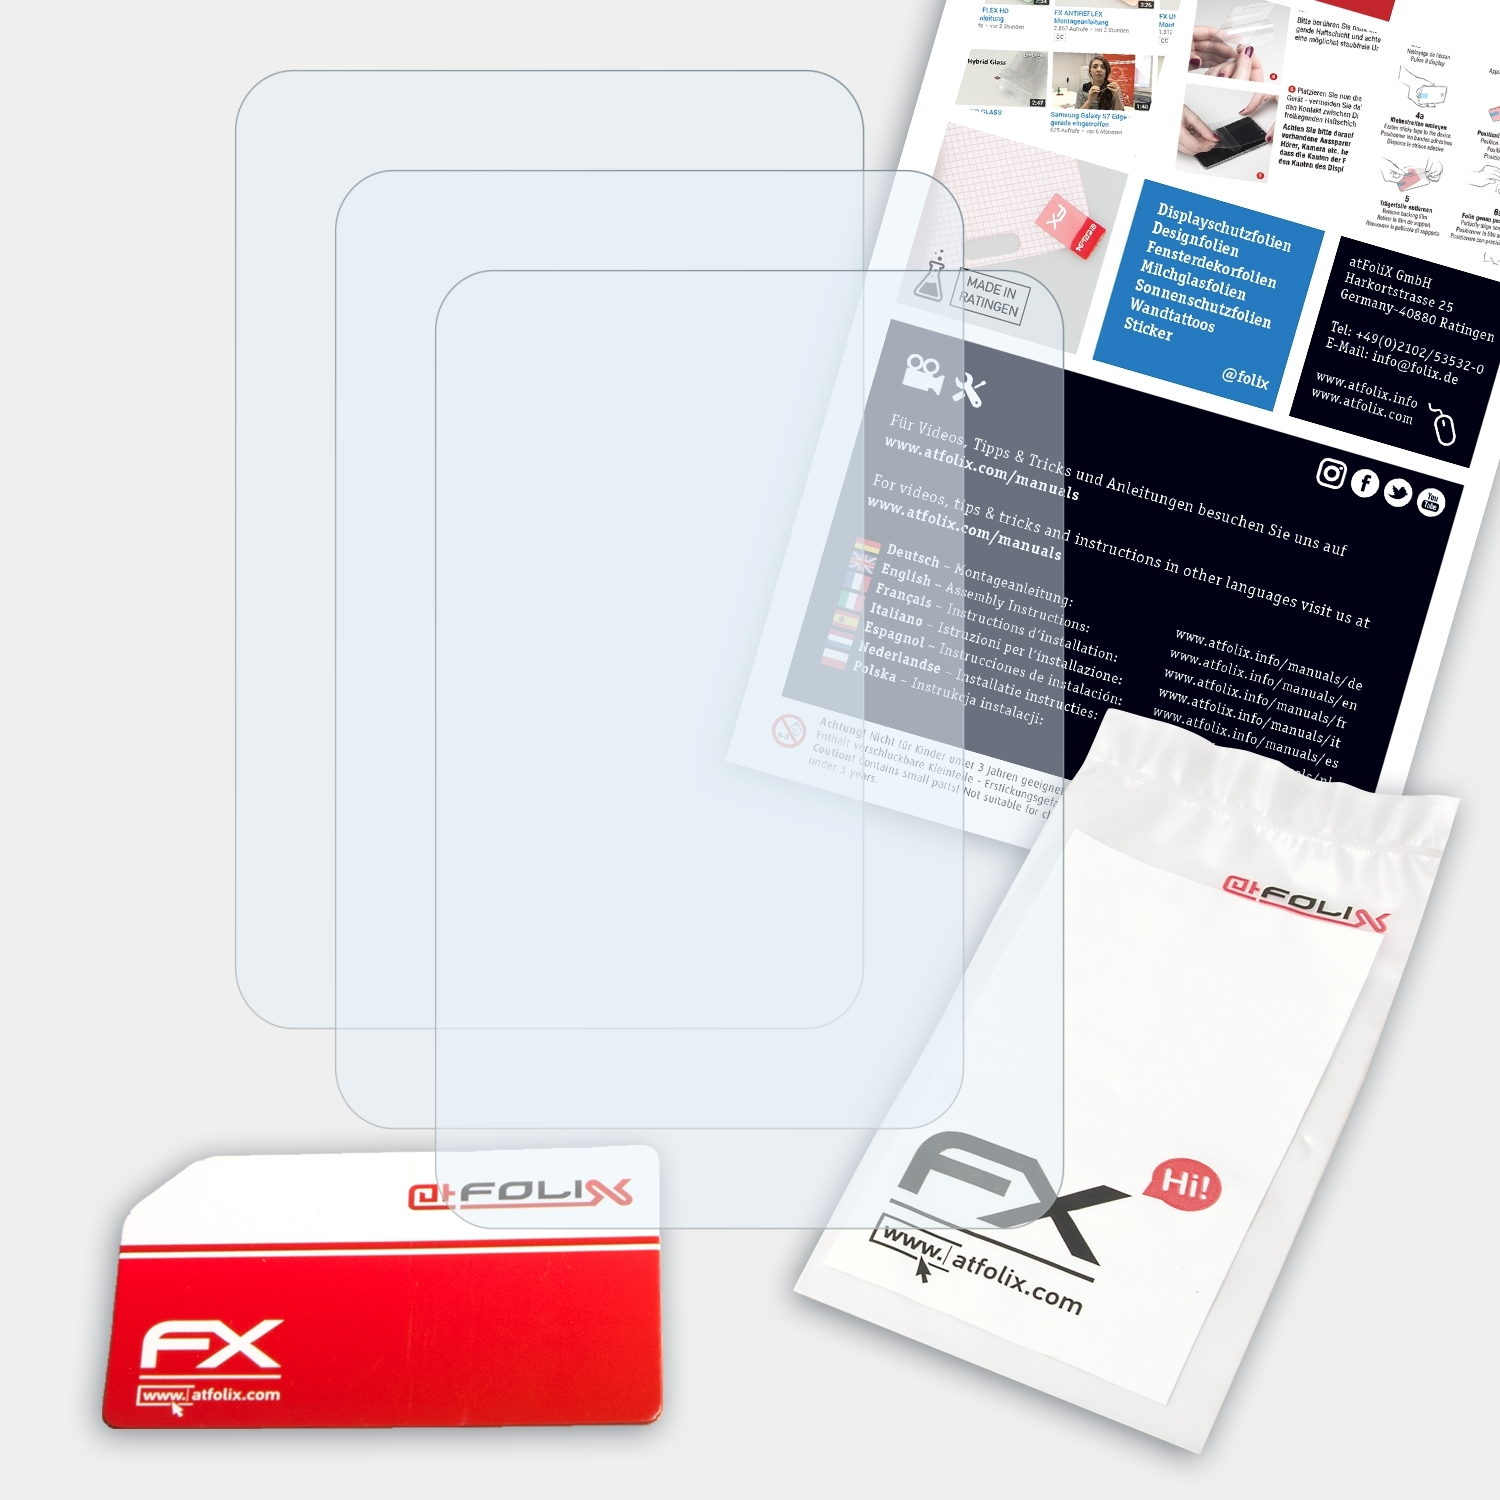 ATFOLIX 3x FX-Clear C160) Displayschutz(für Beafon